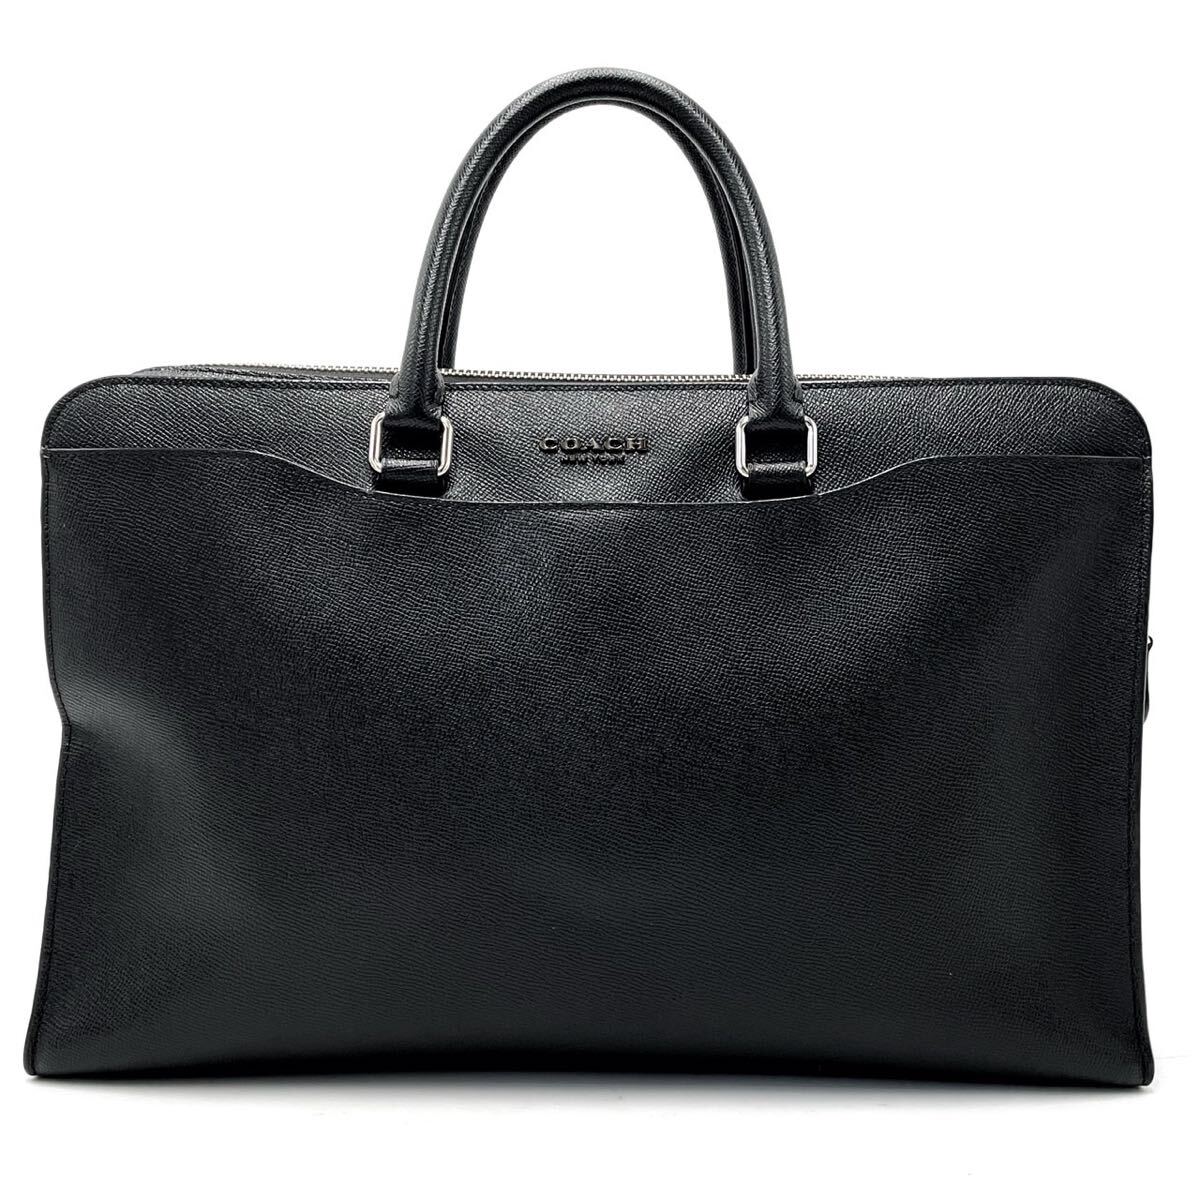 1 jpy [ high class ]COACH Coach handbag tote bag business briefcase A4 size storage men's PVC leather original leather black commuting company commuting 